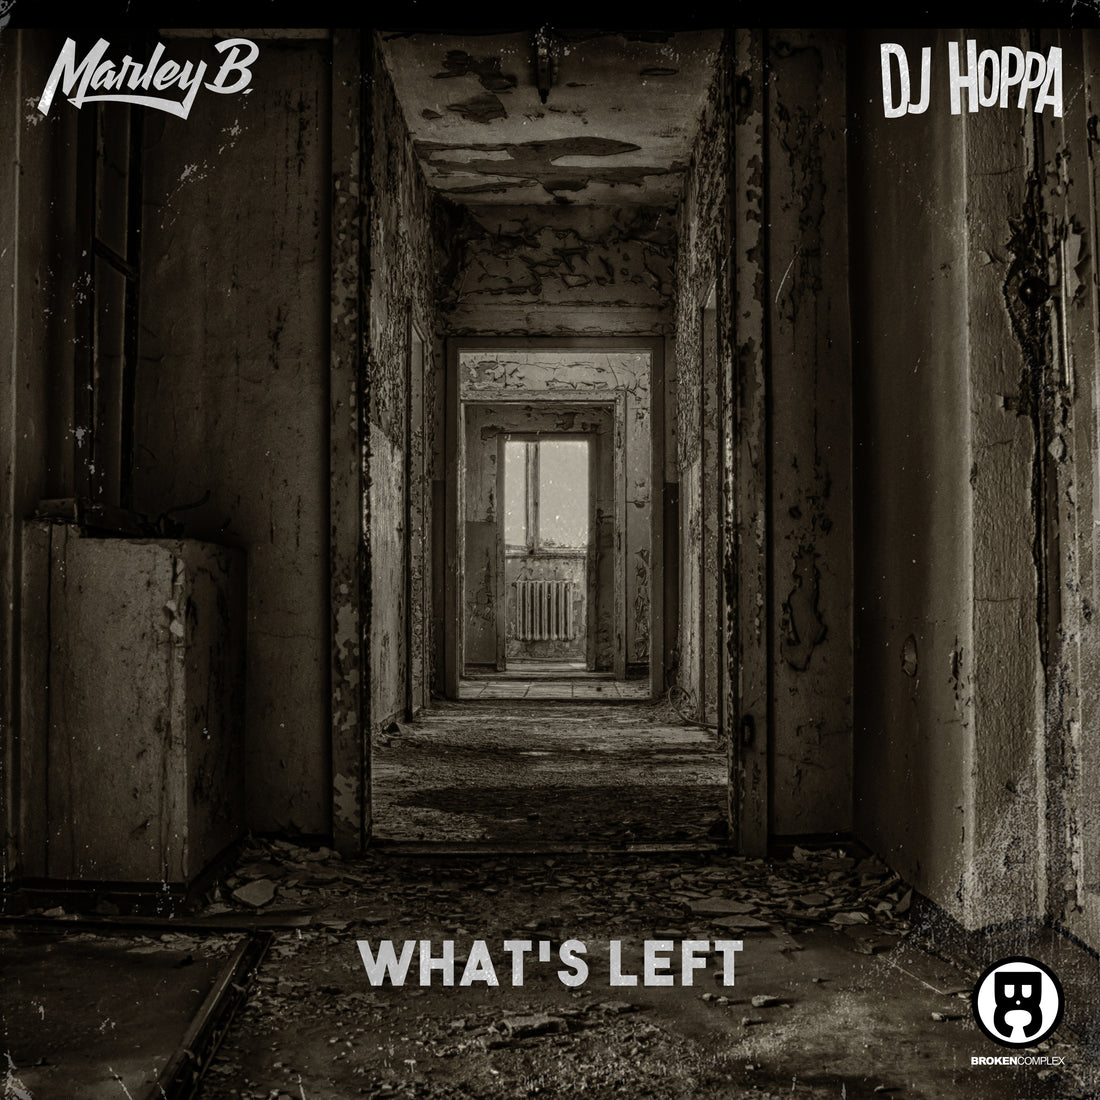 New Single: Marley B. & DJ Hoppa - "What's Left"